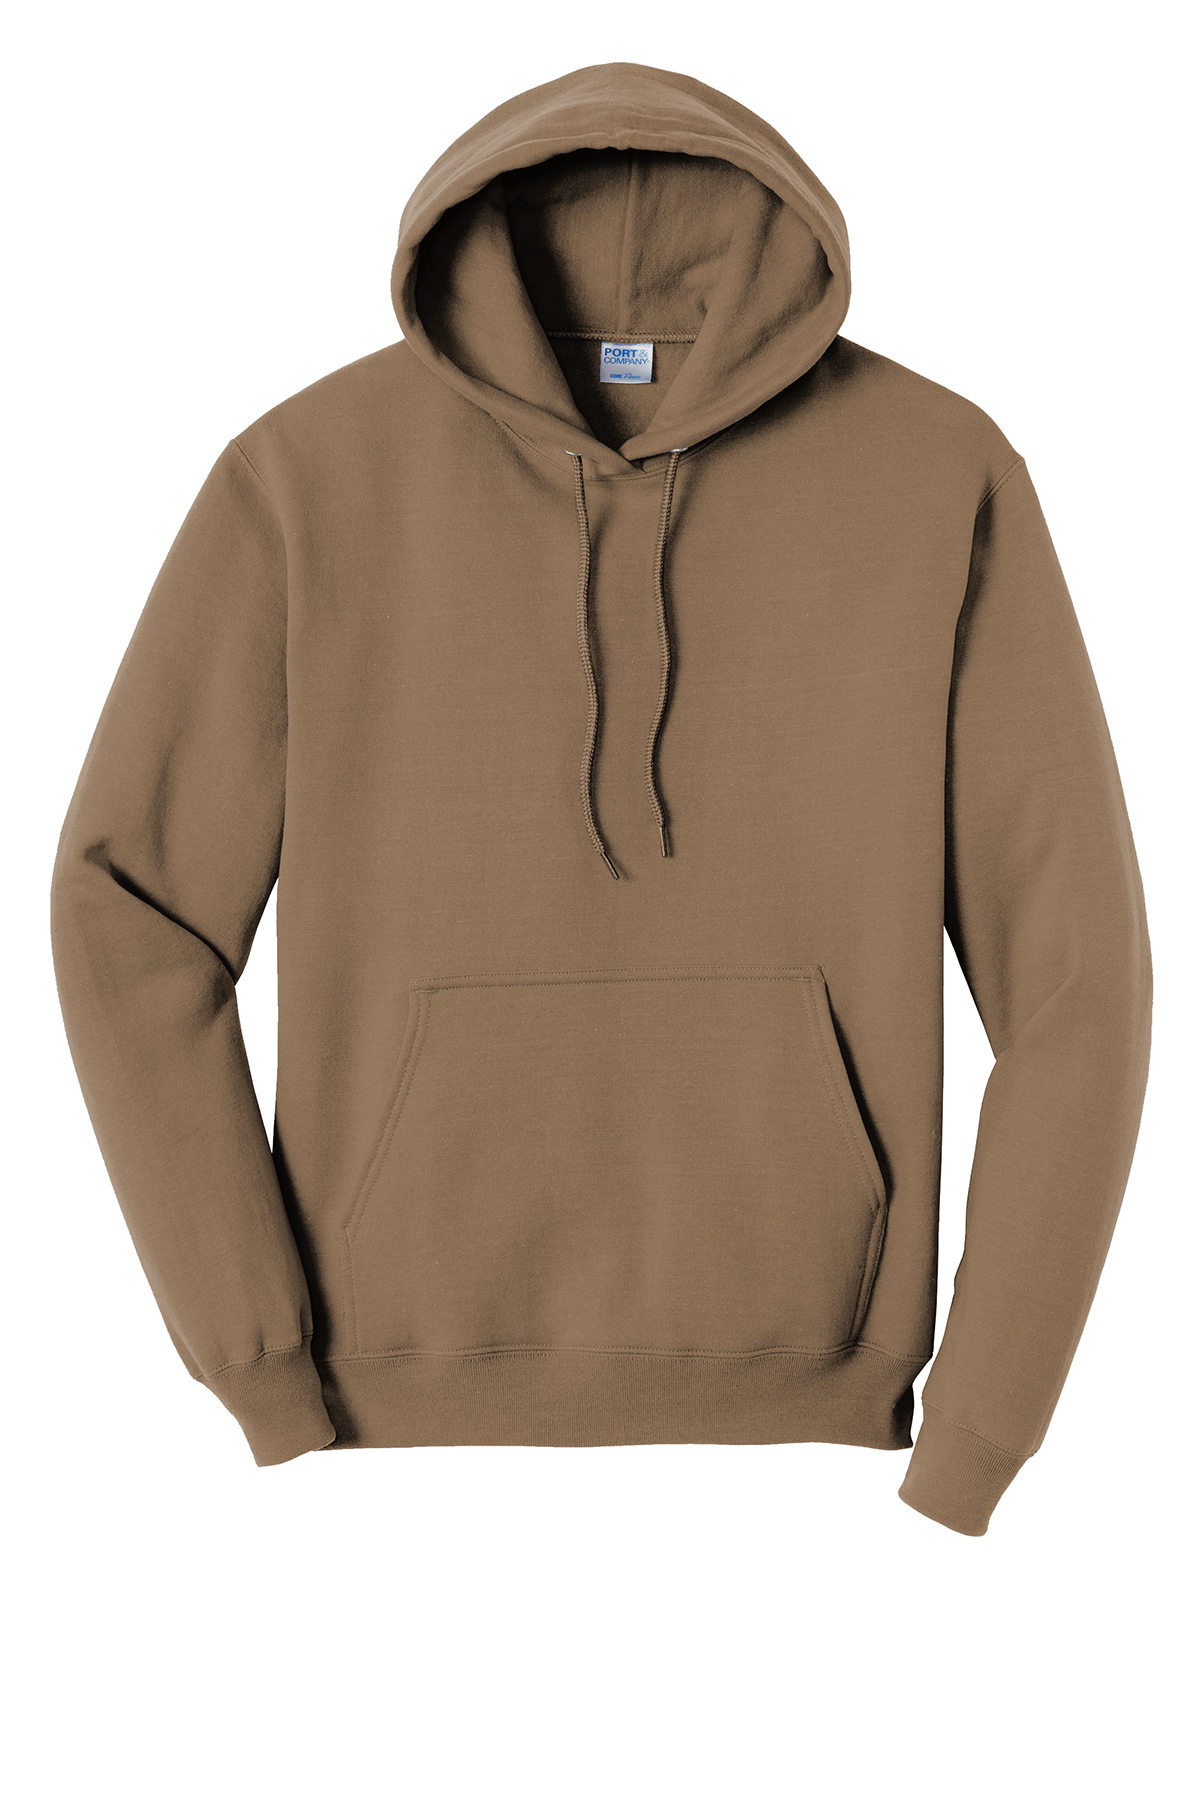 Port & Company Core Fleece Pullover Hooded Sweatshirt | Product | Port &  Company